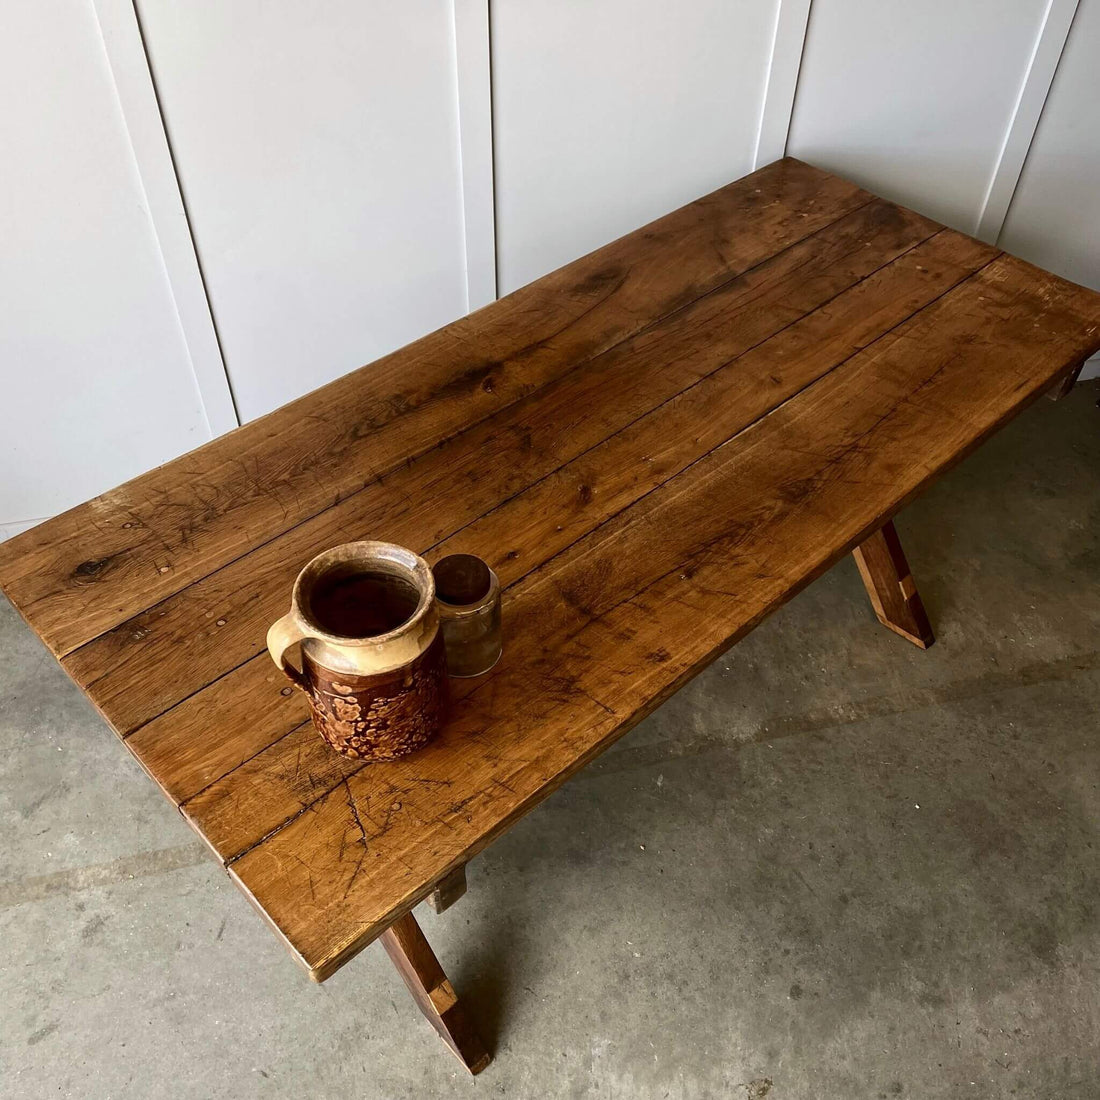 Vintage furniture, top of oak dining table